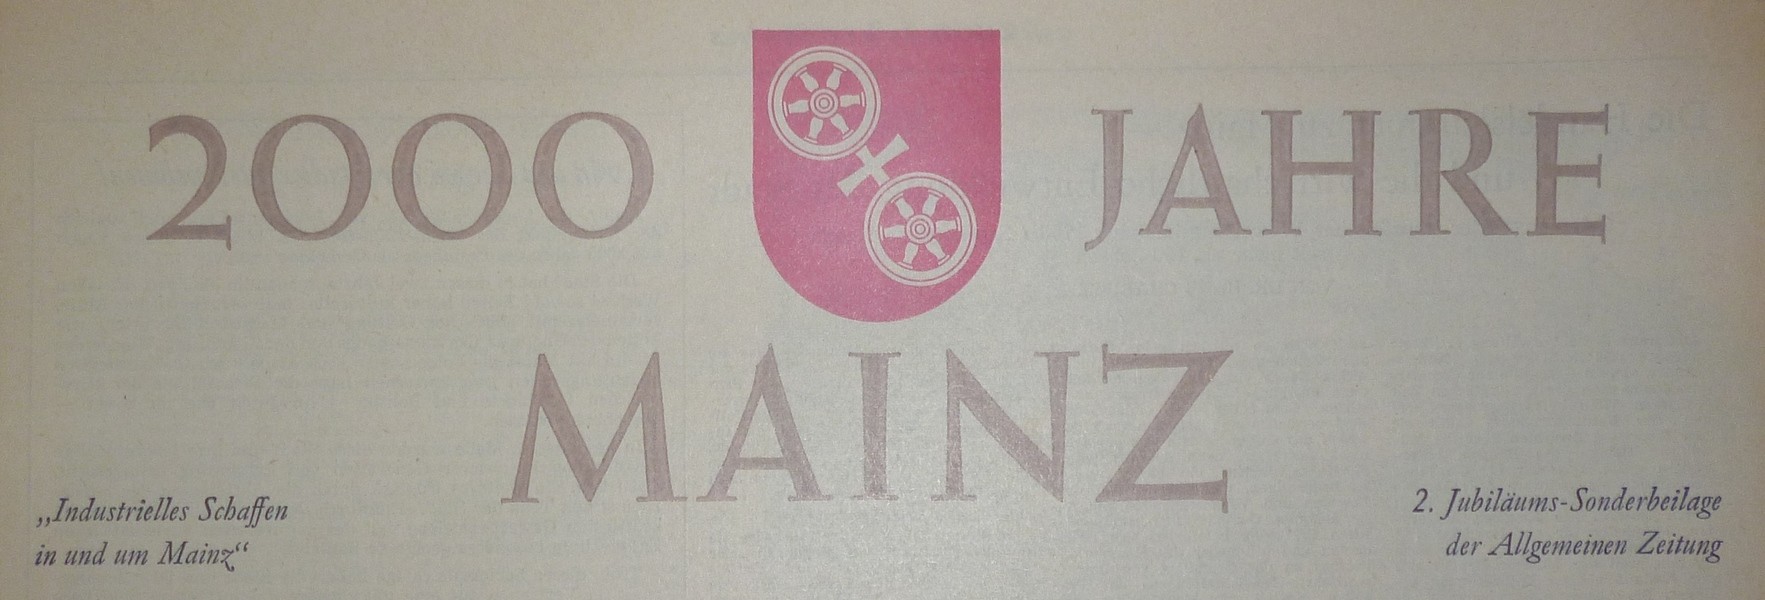 2000 Jahre Mainz (Kulturverein Guntersblum CC BY-NC-SA)